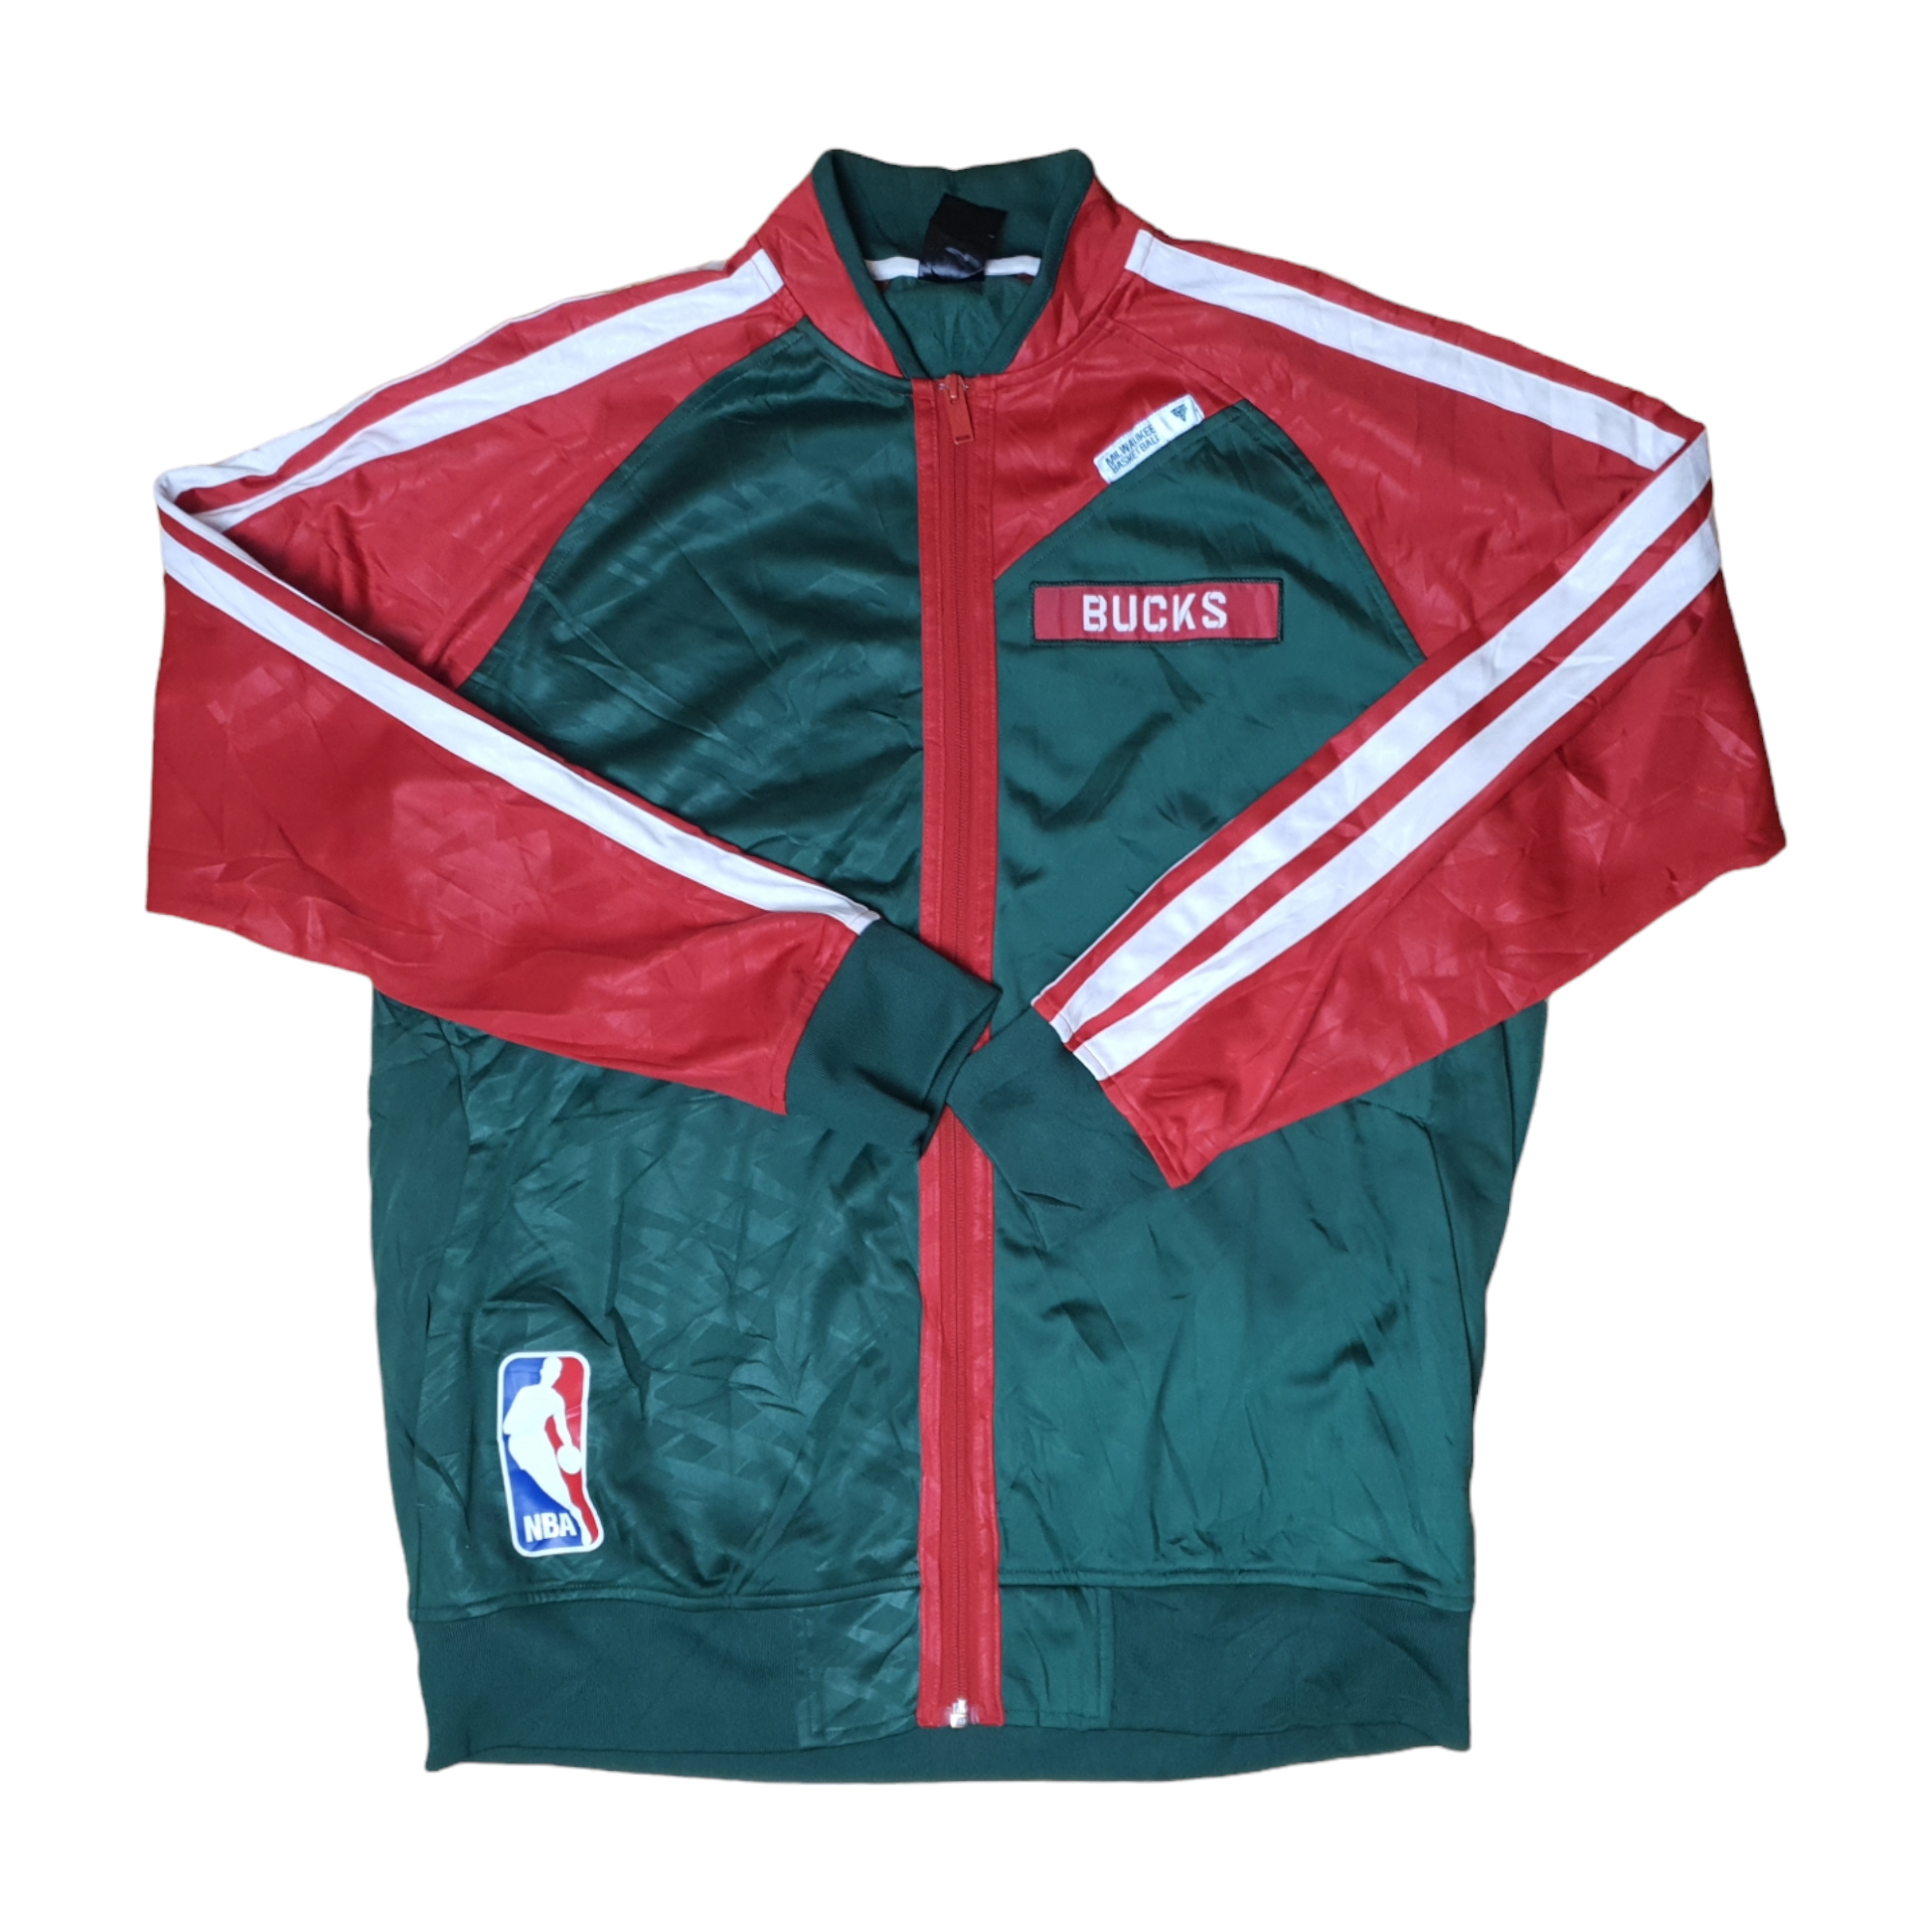 [L] Adidas NBA Trackjacket